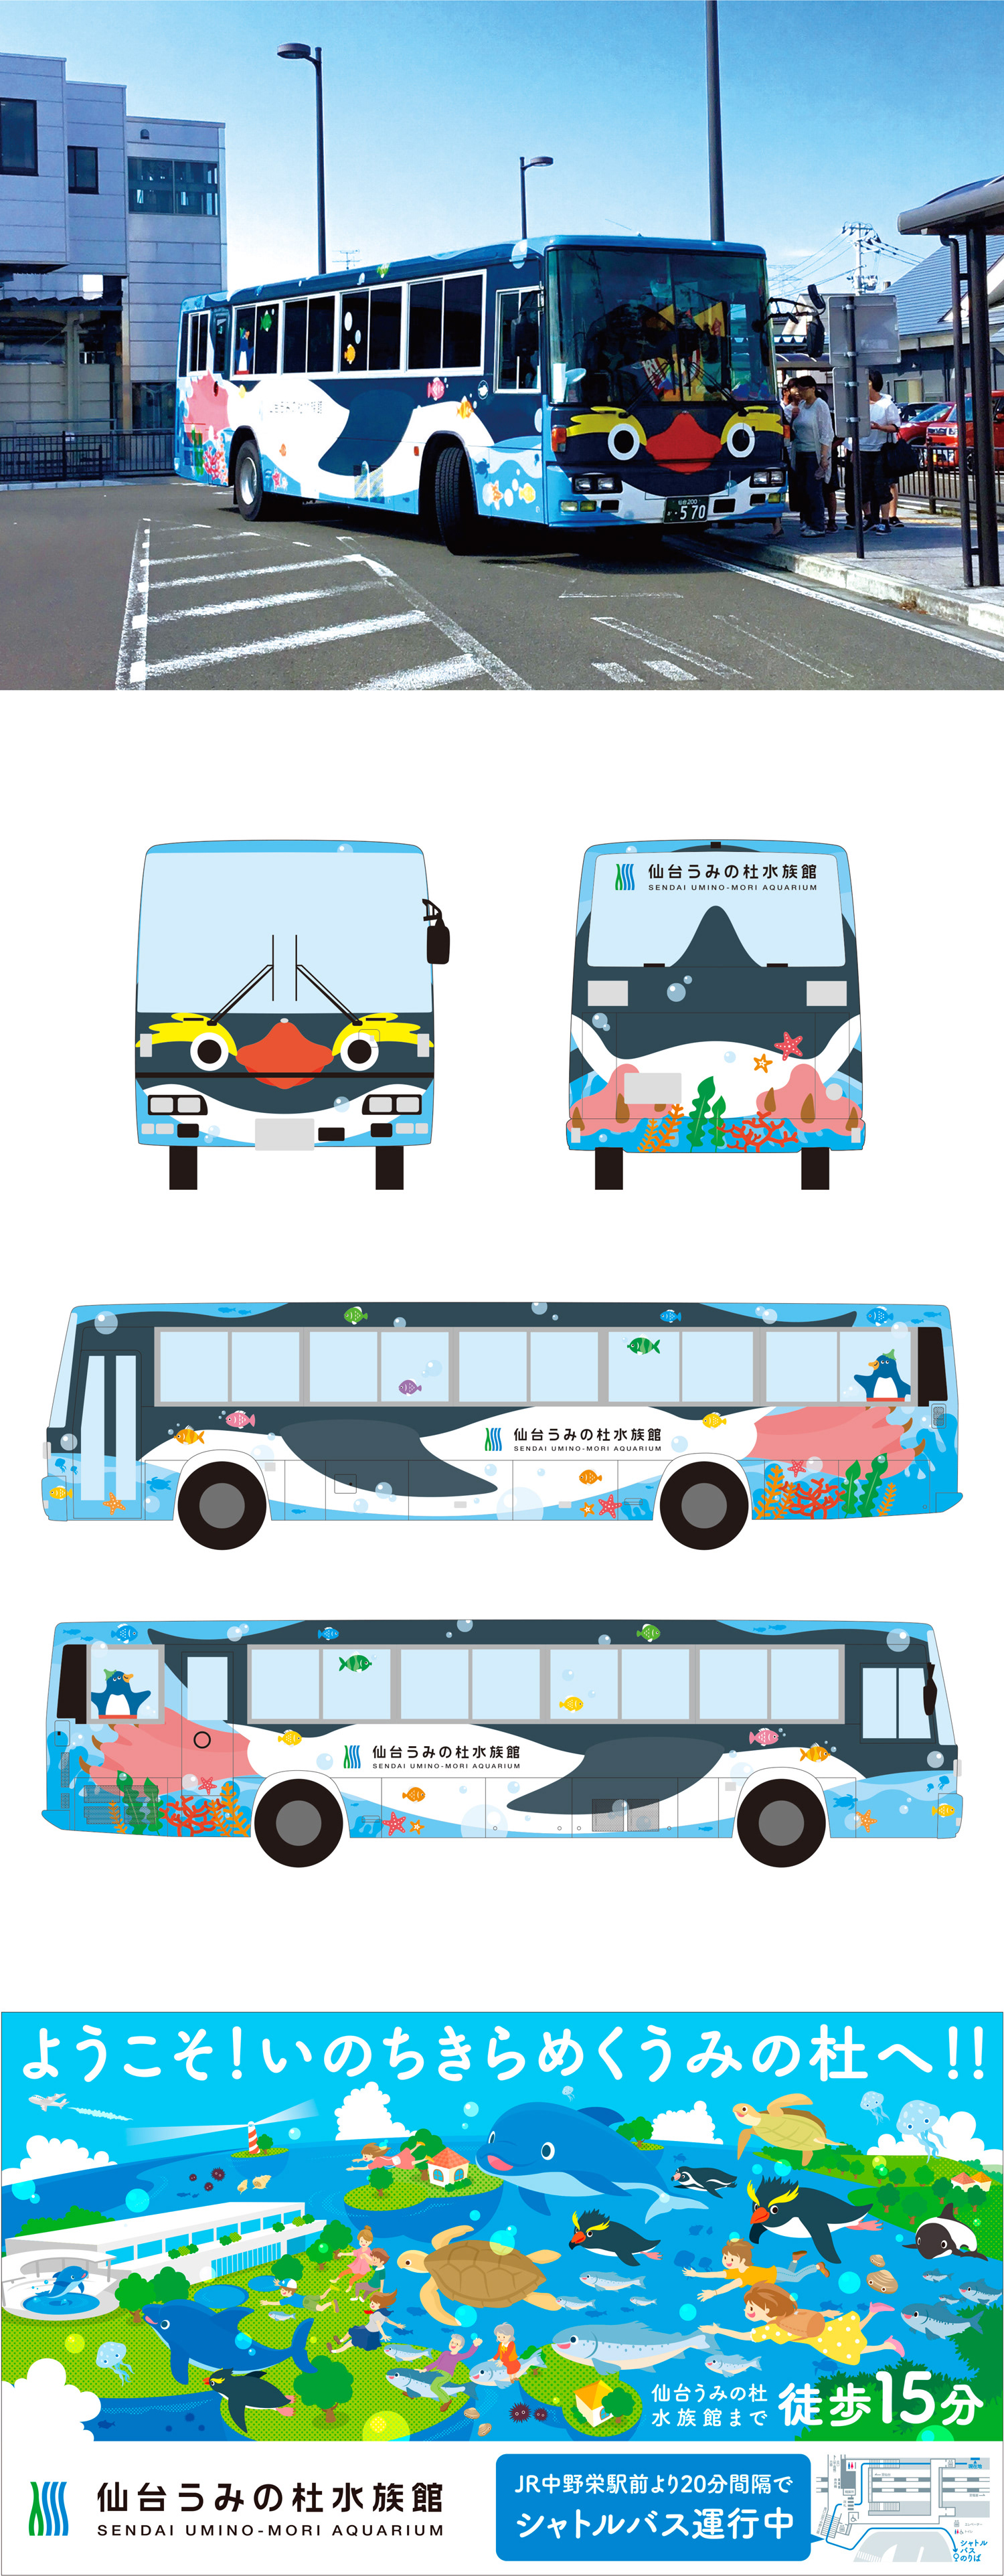 Bocca Illustration 仙台うみの杜水族館シャトルバスデザイン 広告イラスト